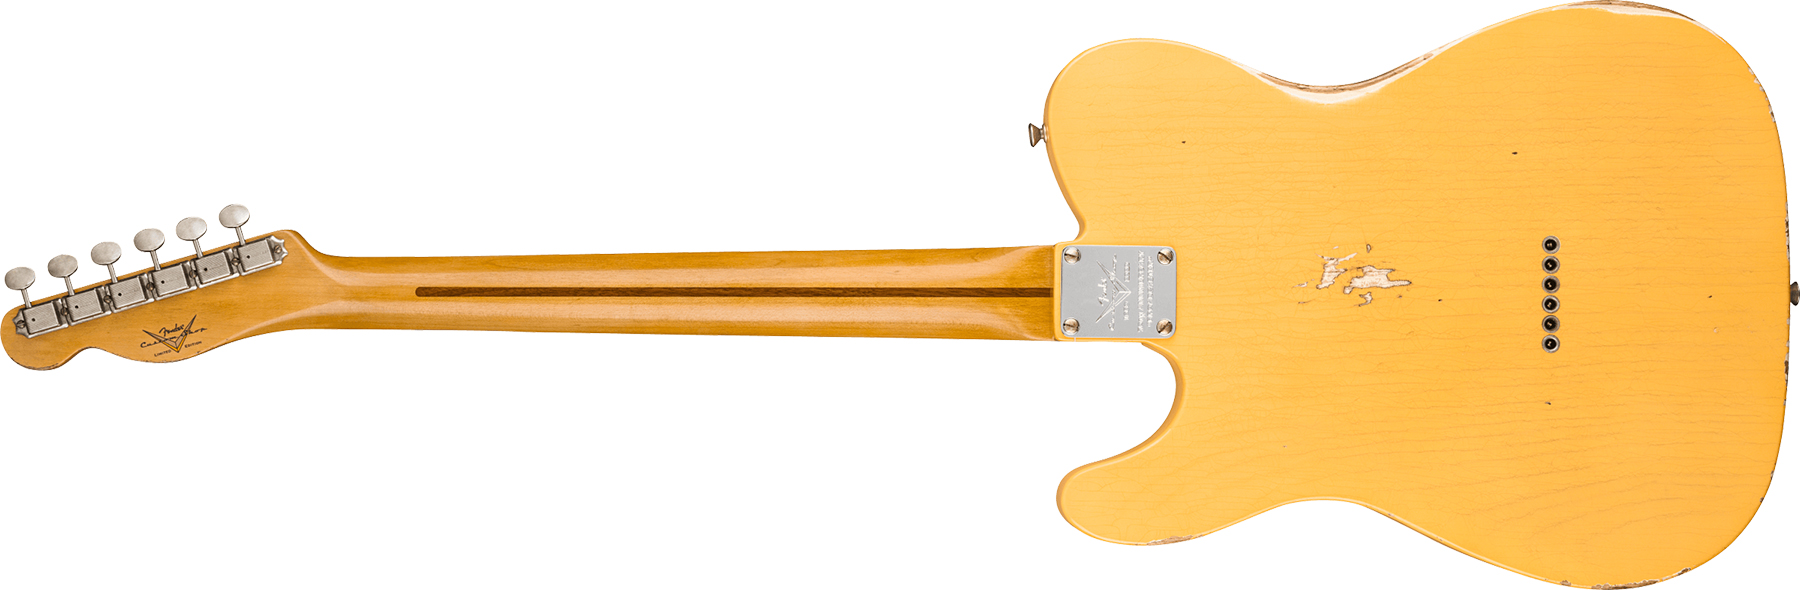 Fender Custom Shop Broadcaster Tele 70th Anniversary Ltd Mn - Relic Aged Nocaster Blonde - Televorm elektrische gitaar - Variation 1